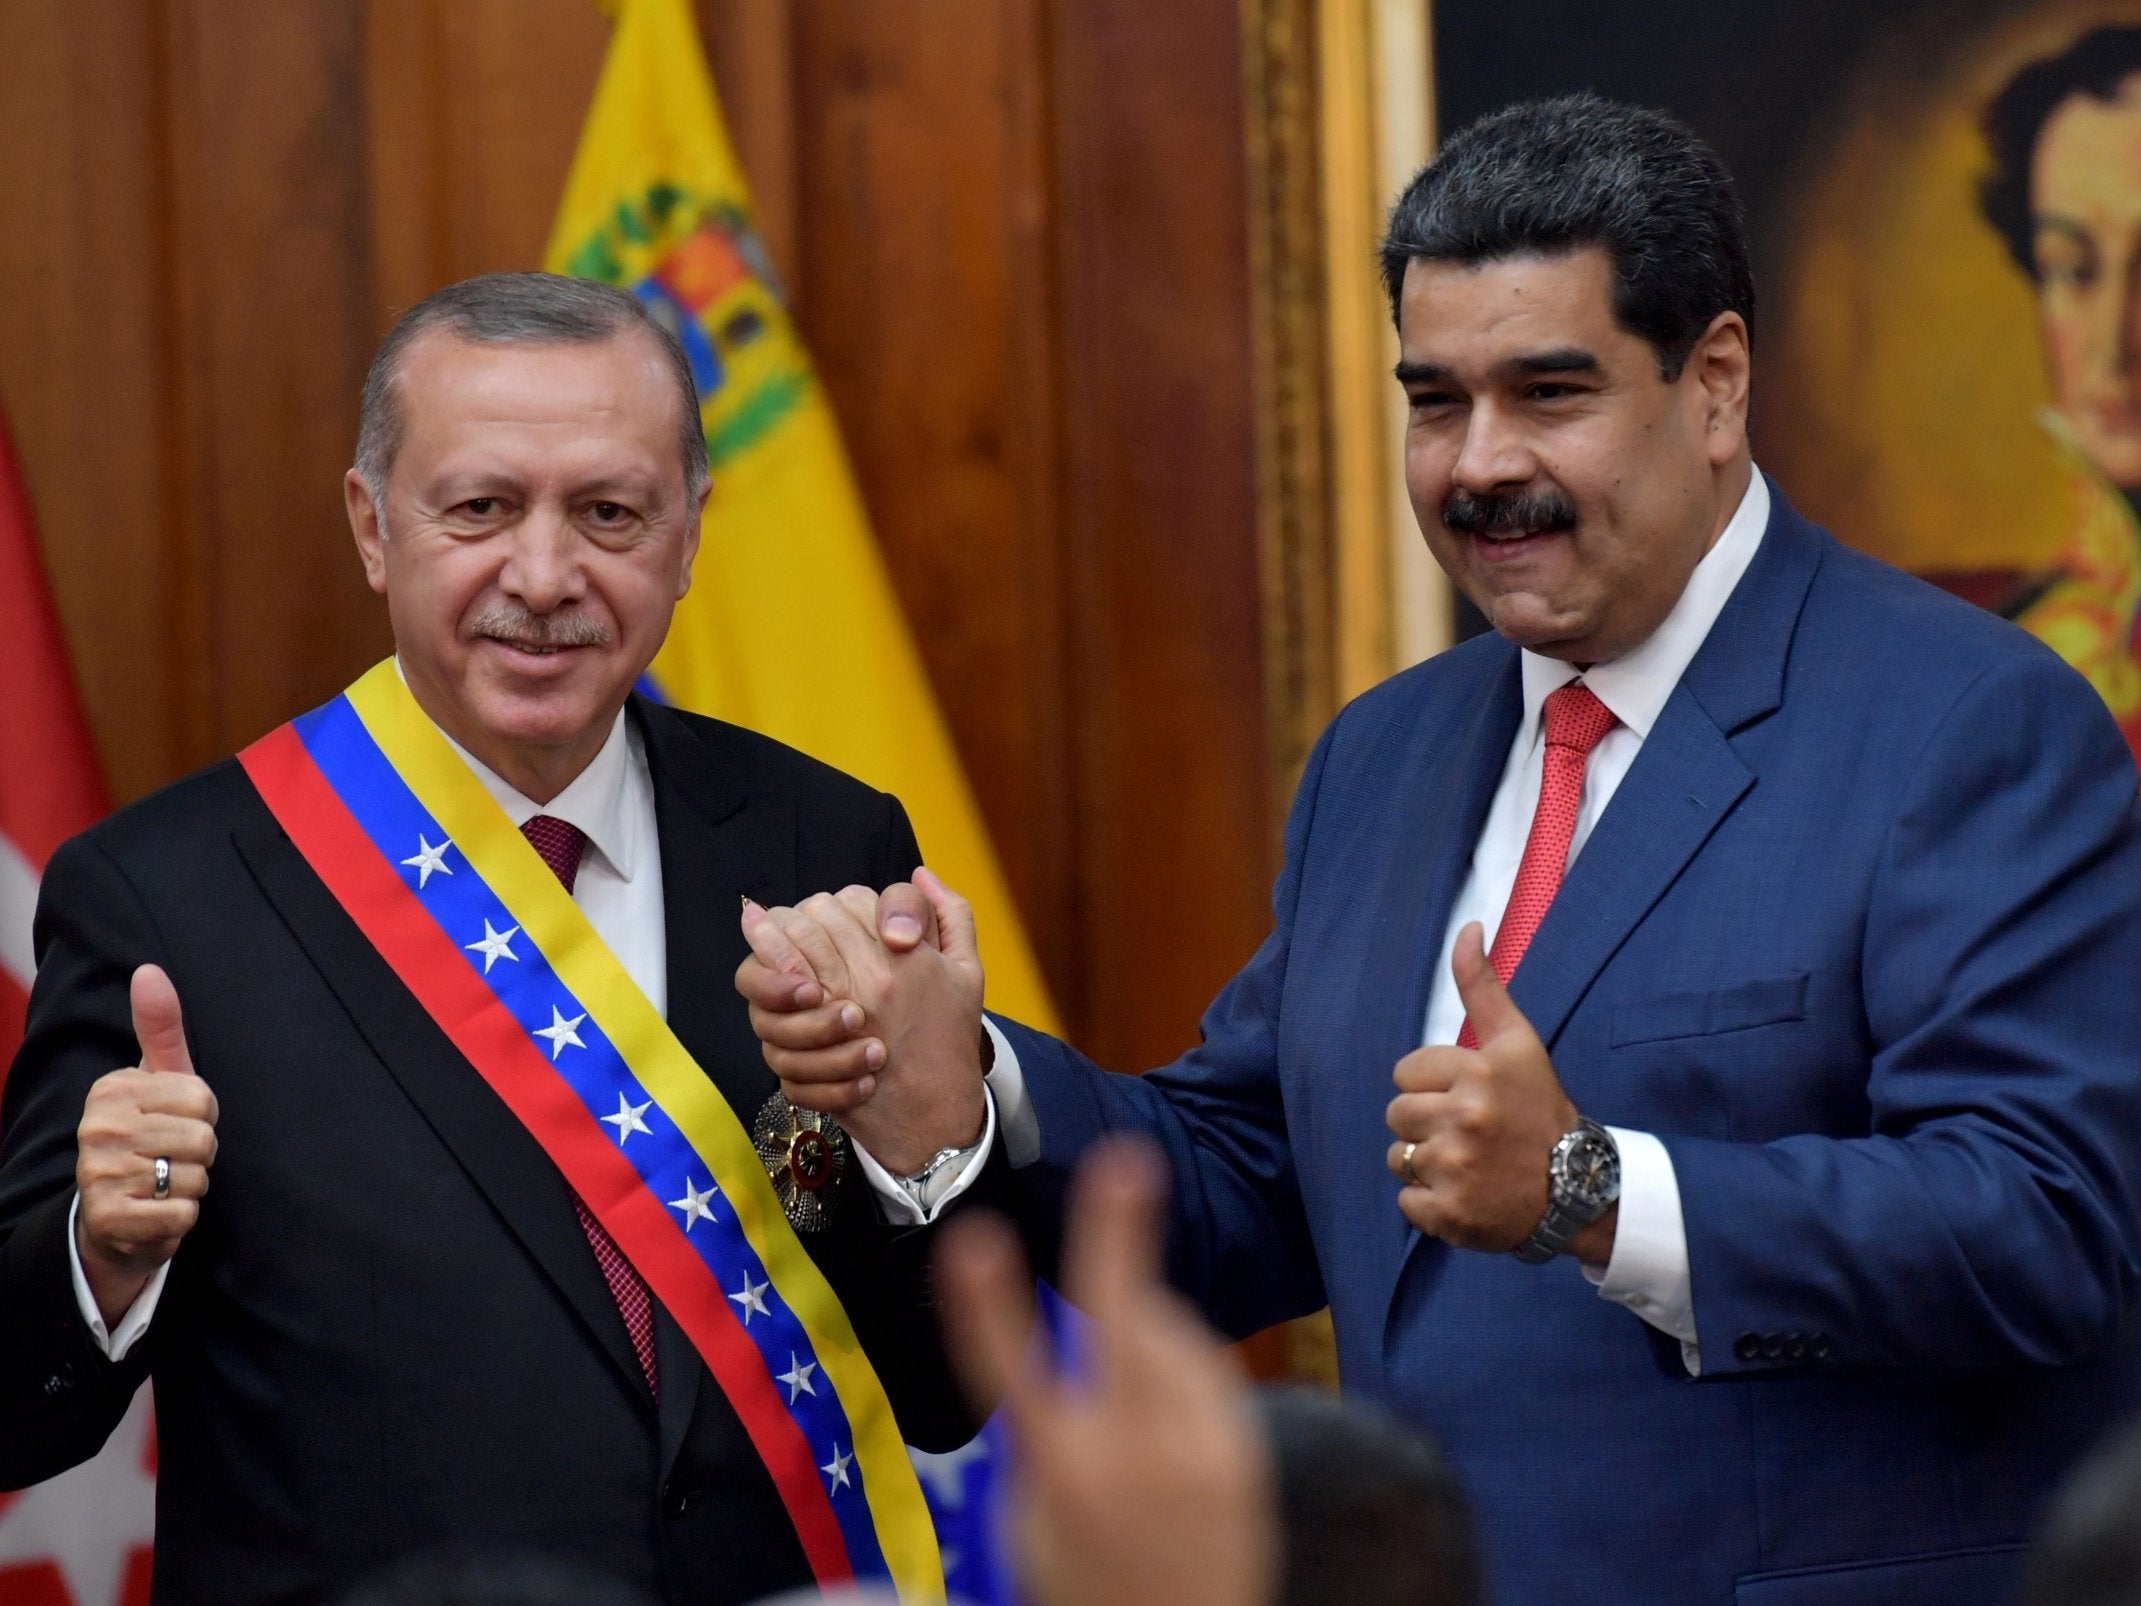 Venezuelan President Nicolas Maduro and Turkish President Recep Tayyip Erdogan at Miraflores Presidential Palace in Caracas in December